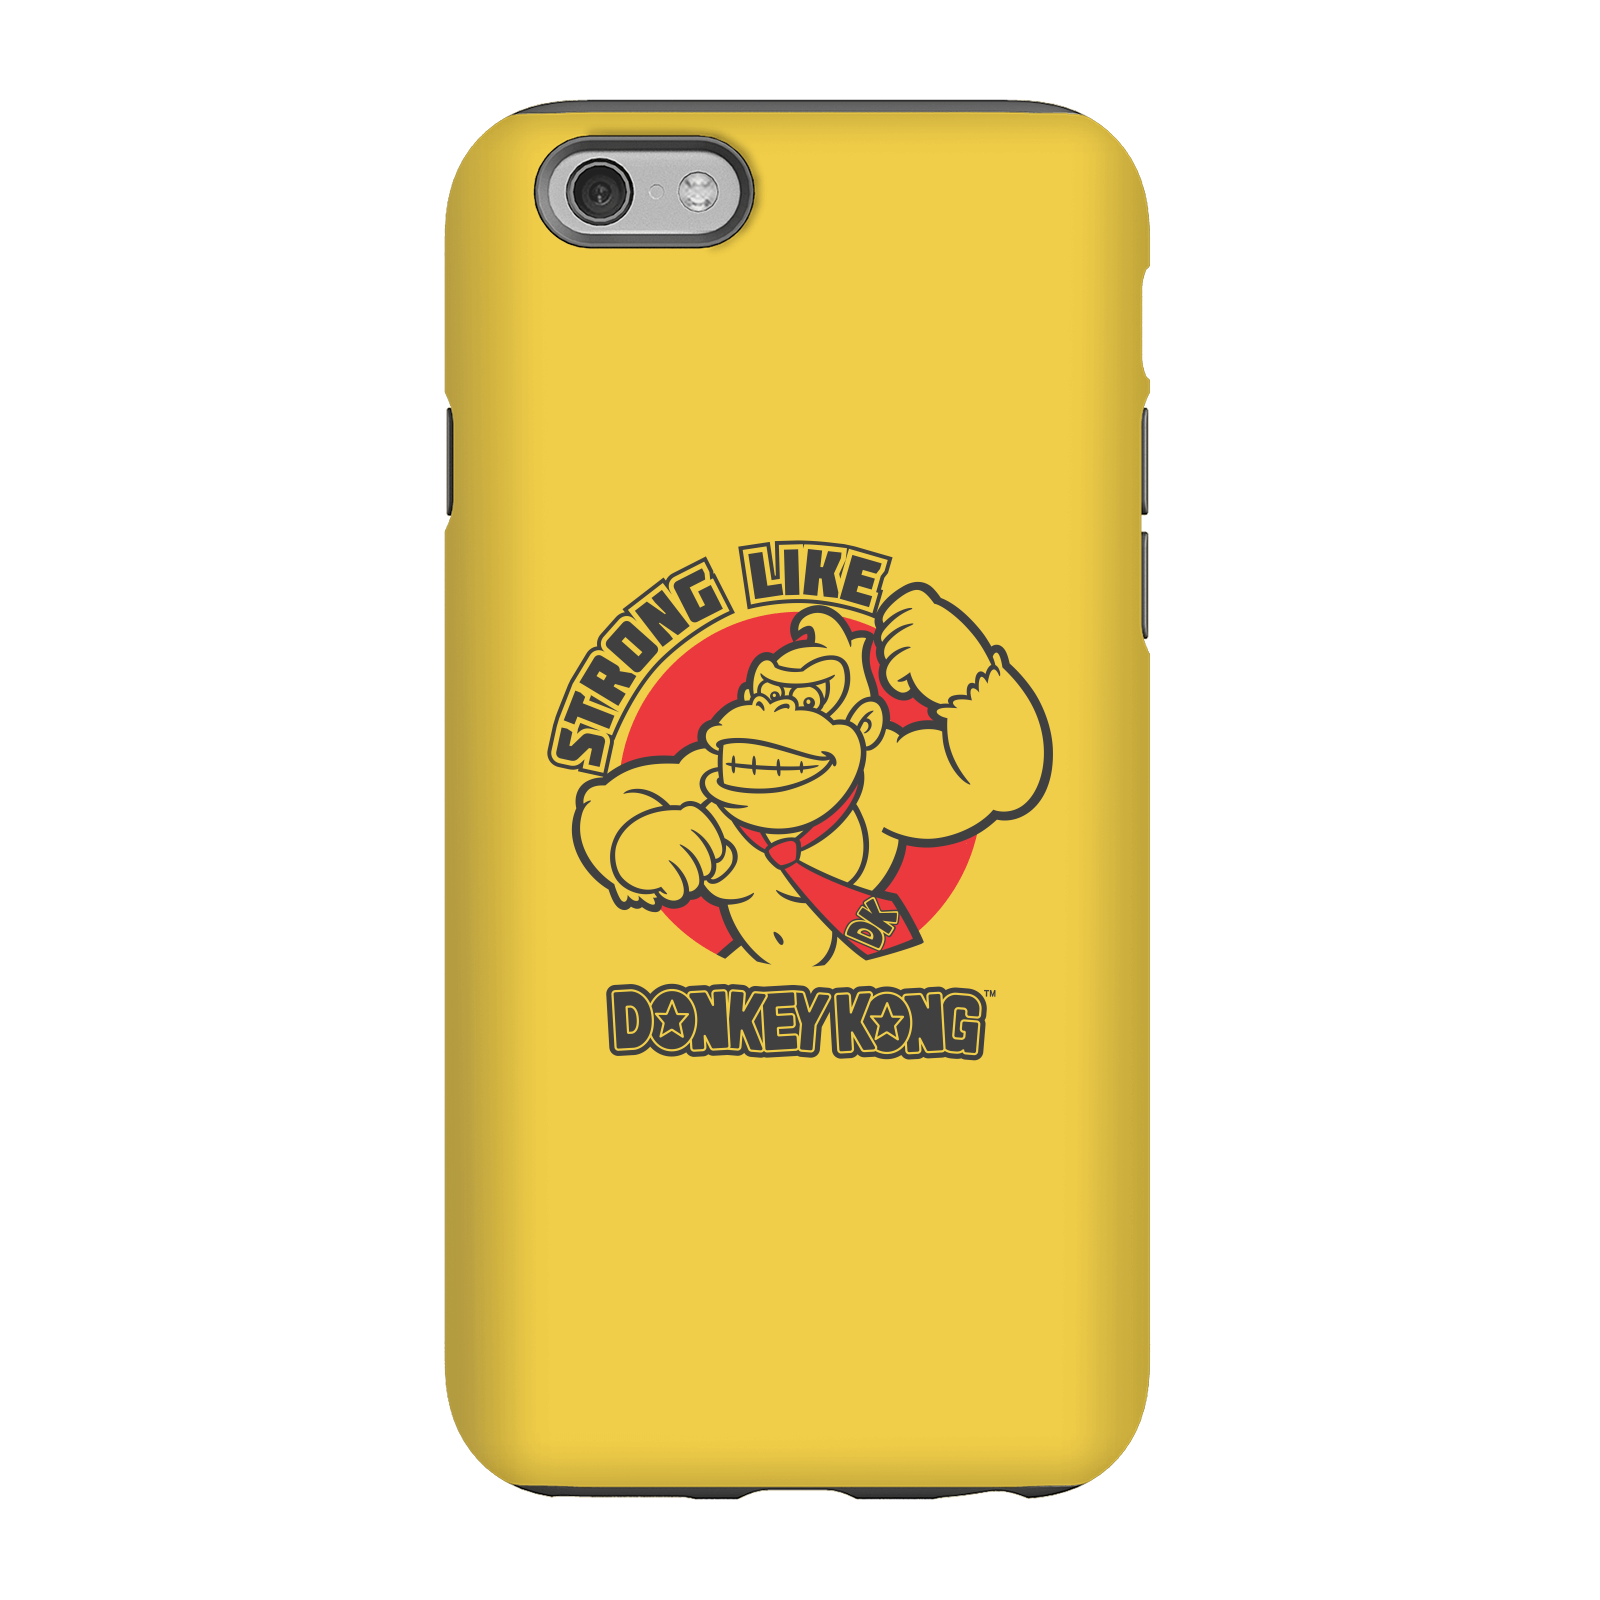 Nintendo Donkey Kong Strong Like Donkey Kong Phone Case - iPhone 6 - Tough Case - Gloss